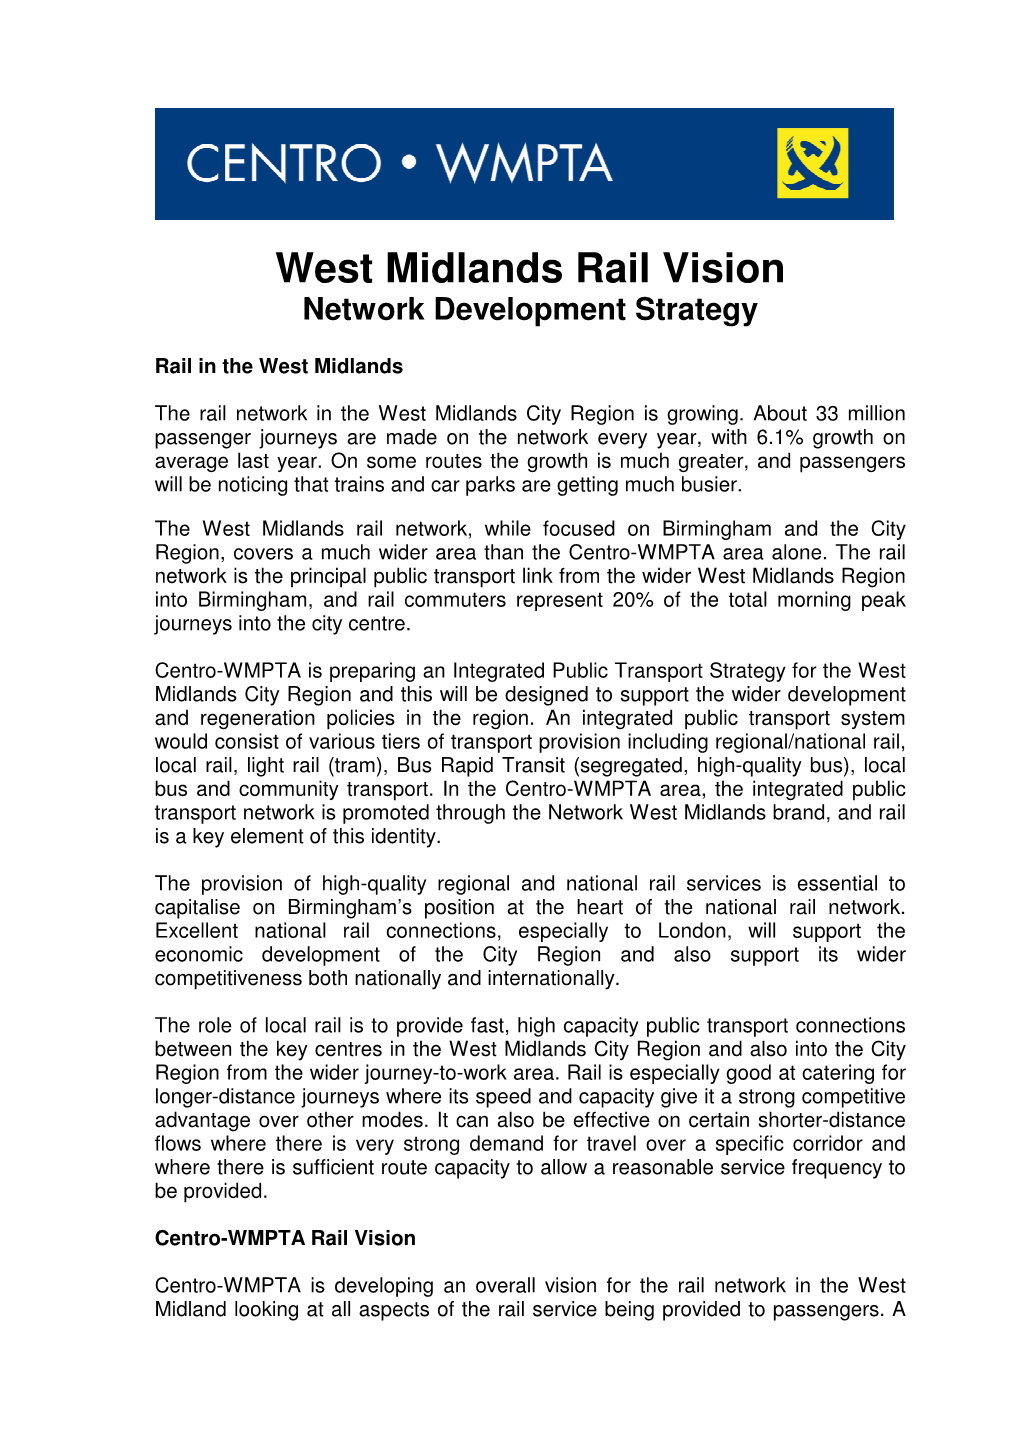 West Midlands Rail Vision Network Development Strategy